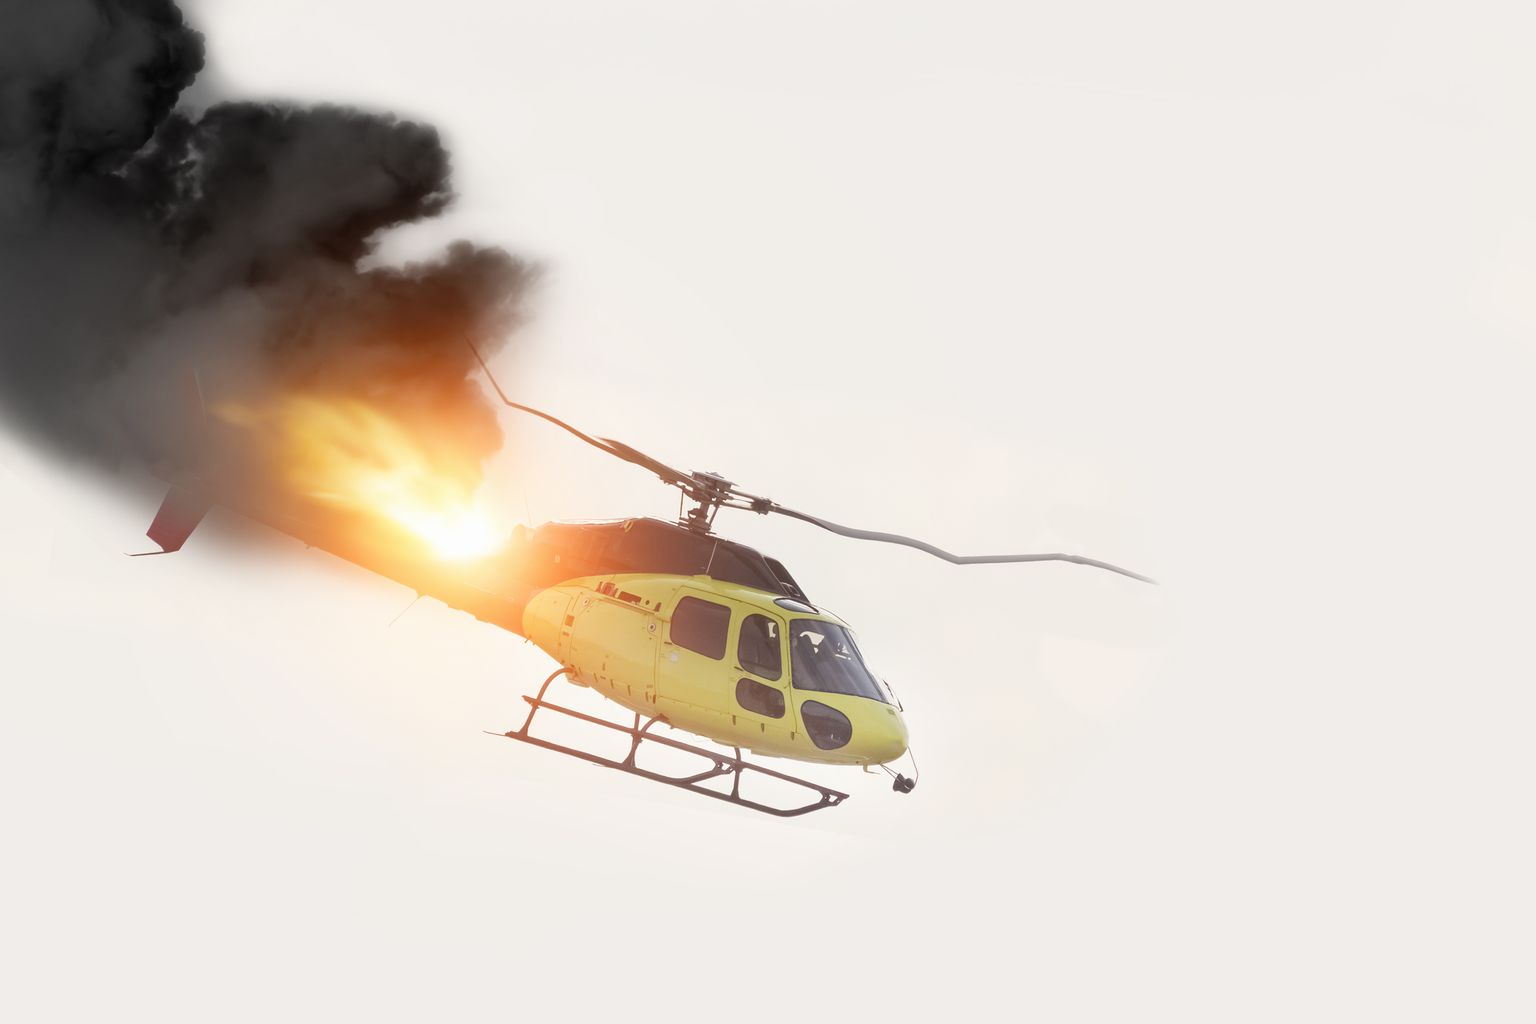 Катастрофа вертолета. Иллюстративное фото